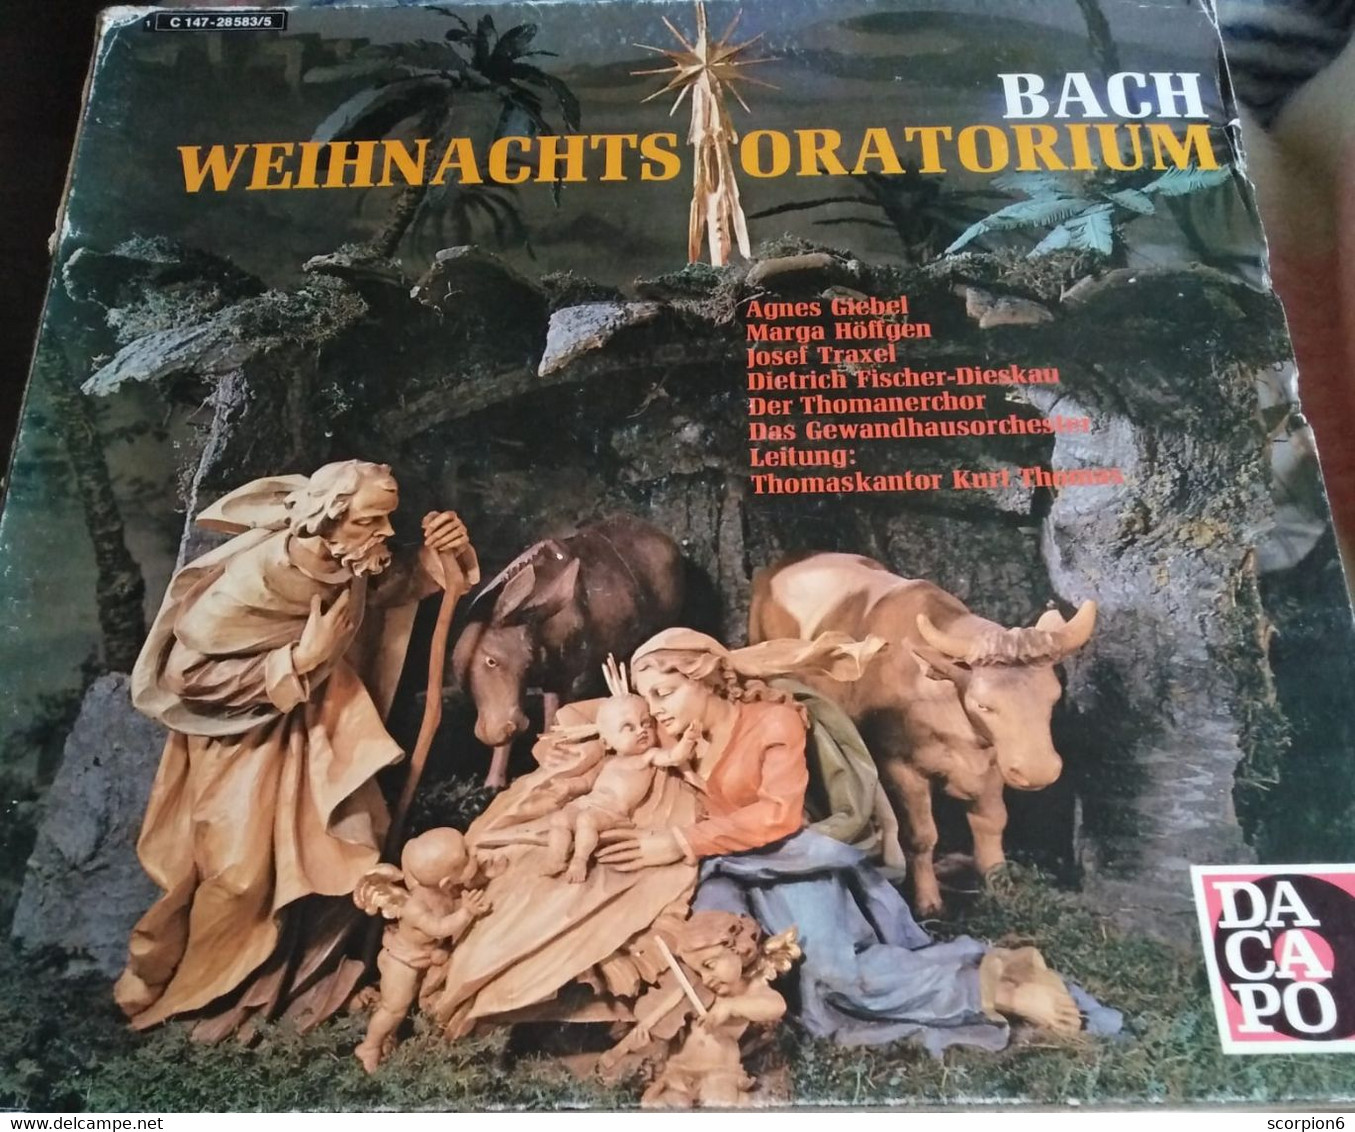 3 X 12" LP - Bach - Weihnachtsoratorium - Christmas Carols